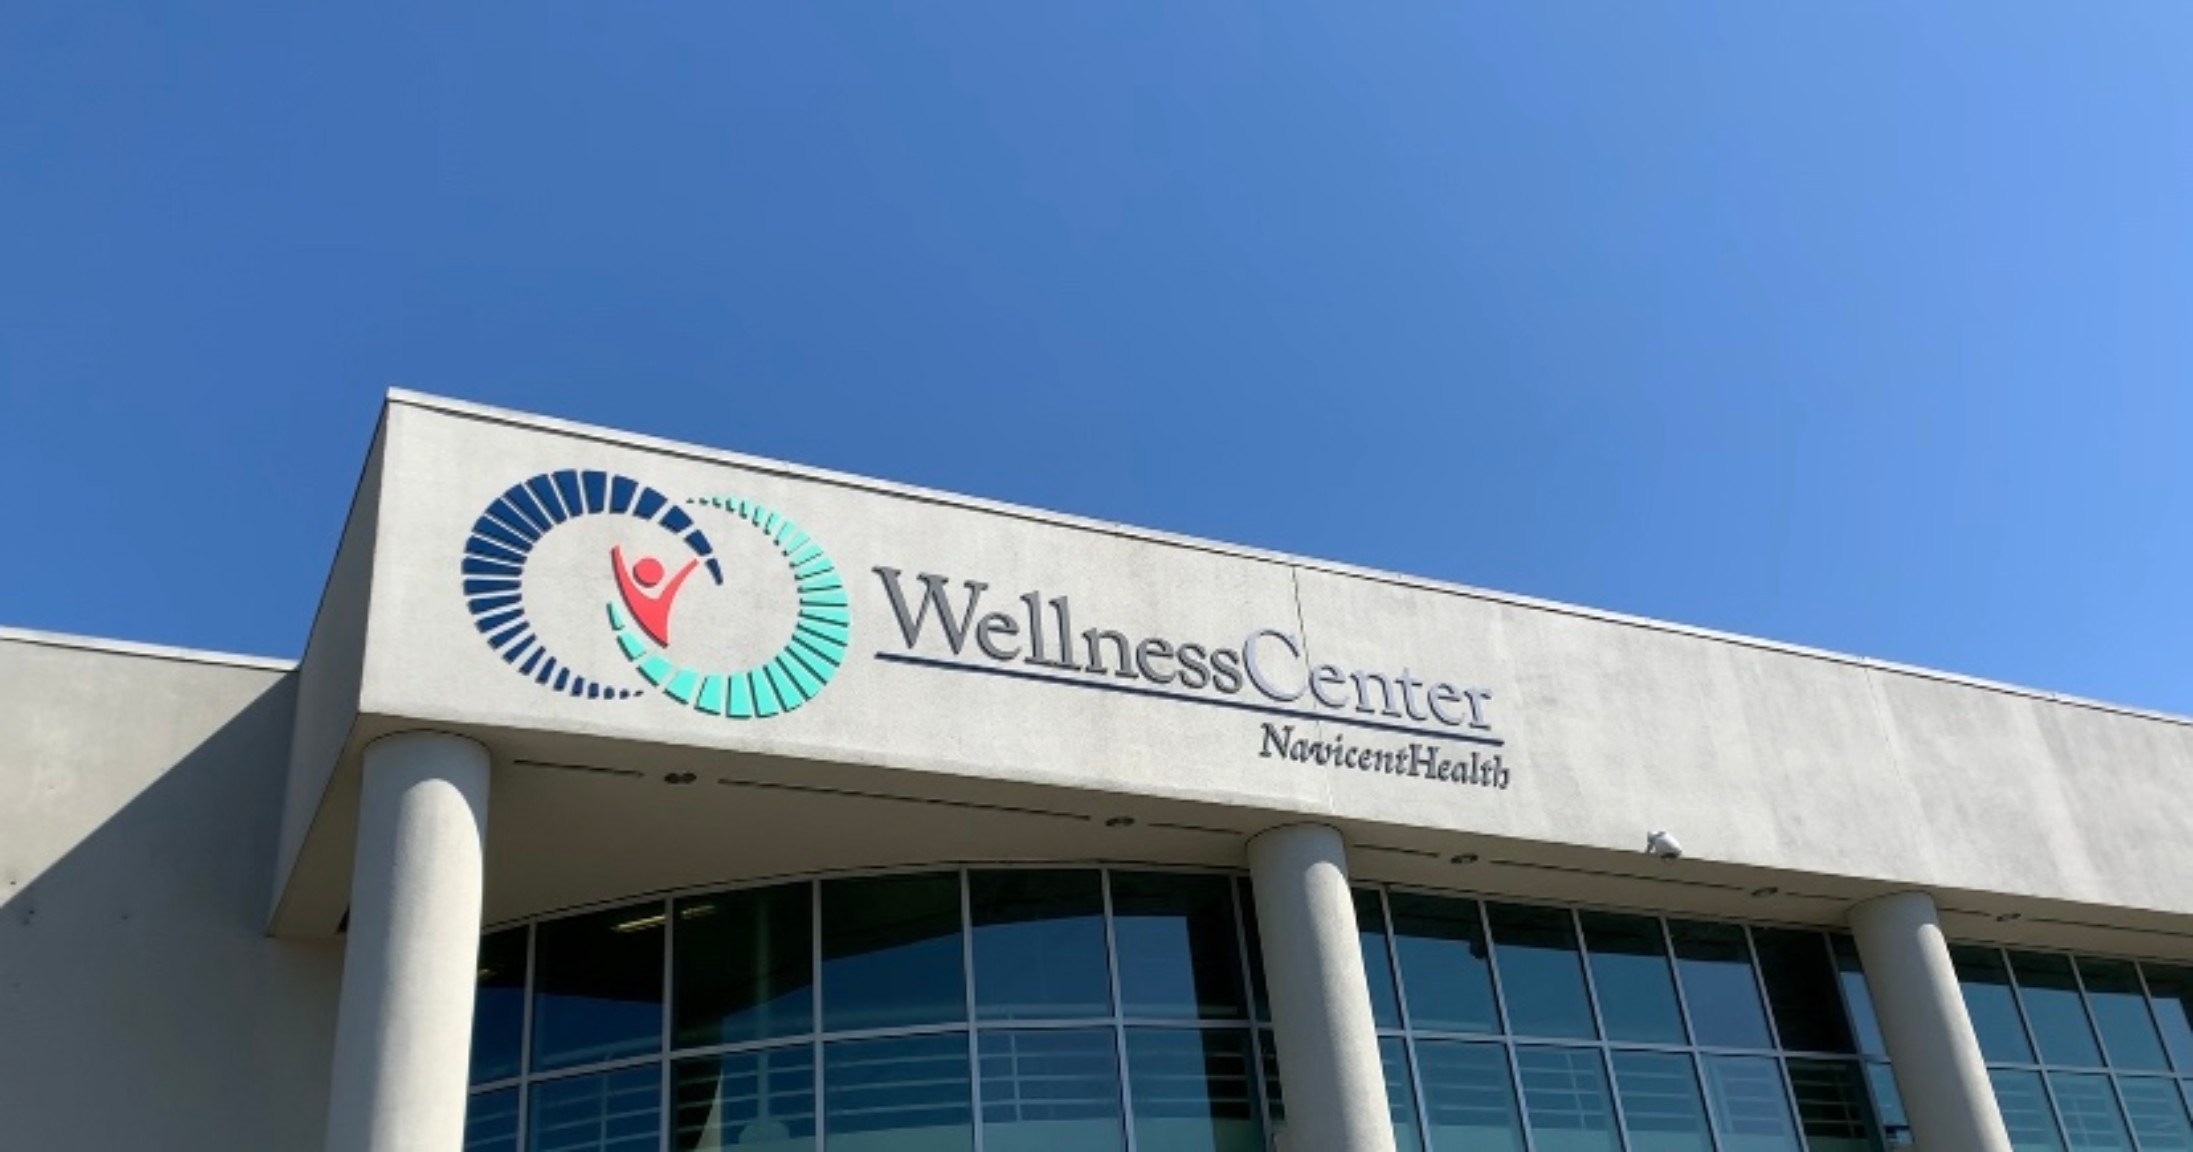 Wellness Center building